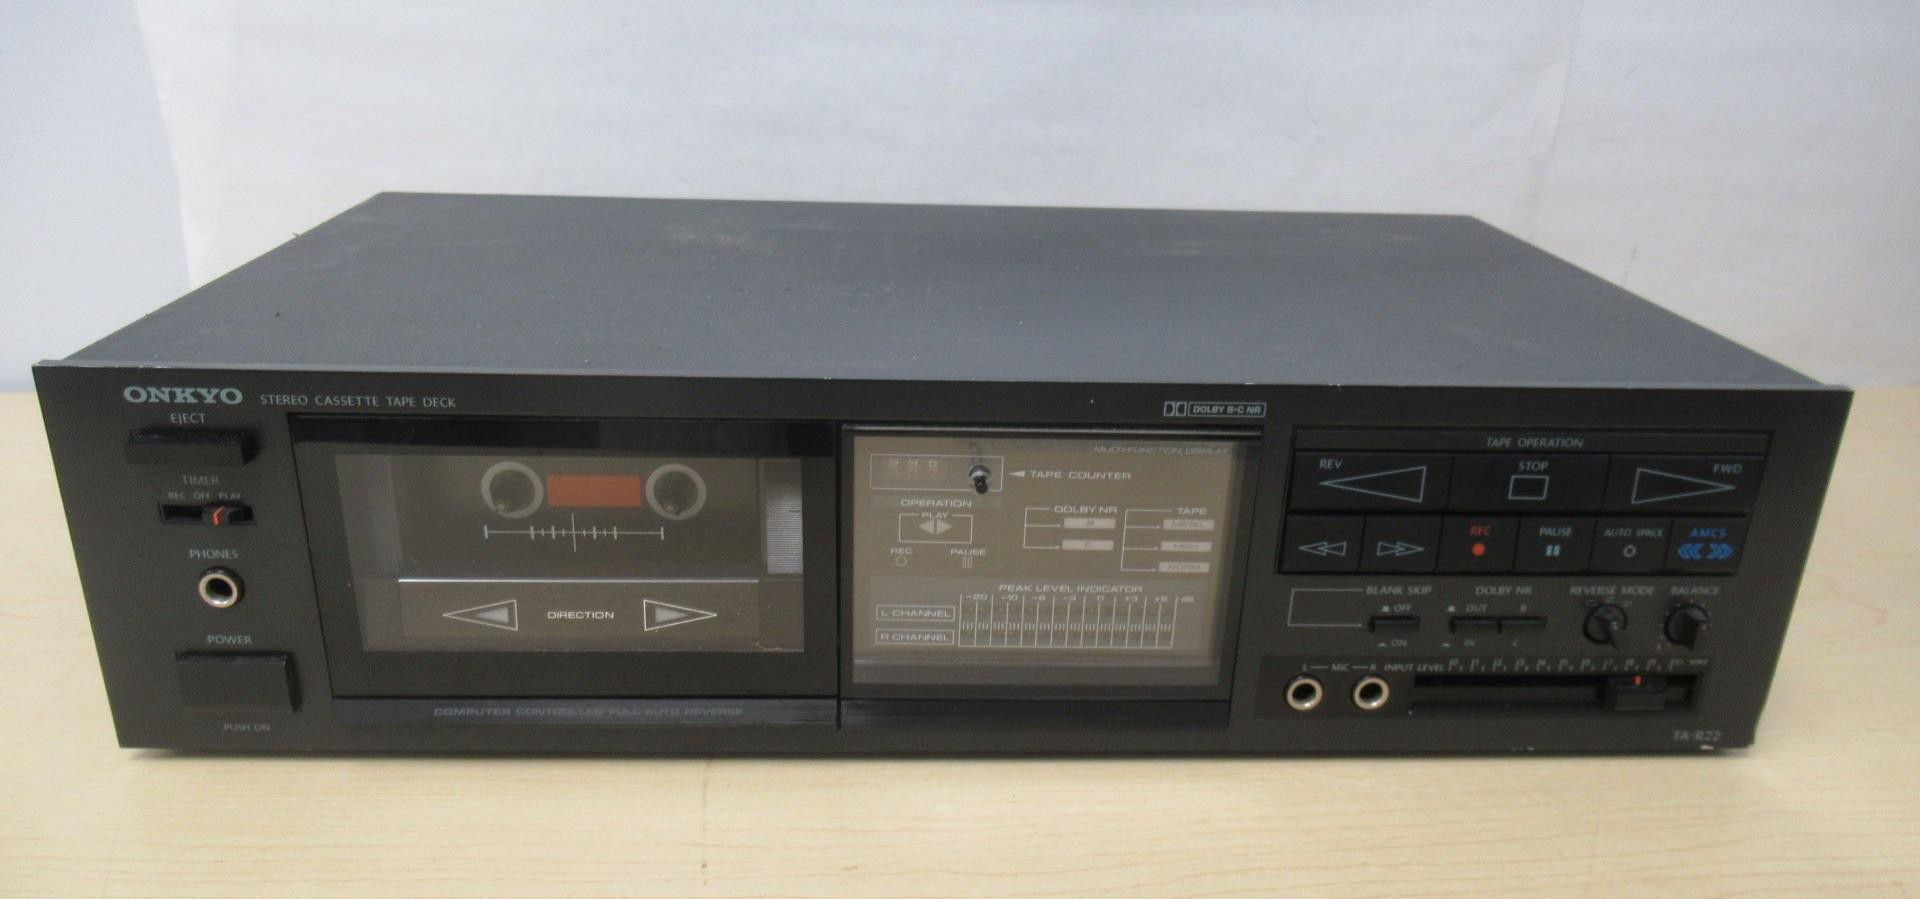 Onkyo TA-R22 Stereo Cassette Deck.